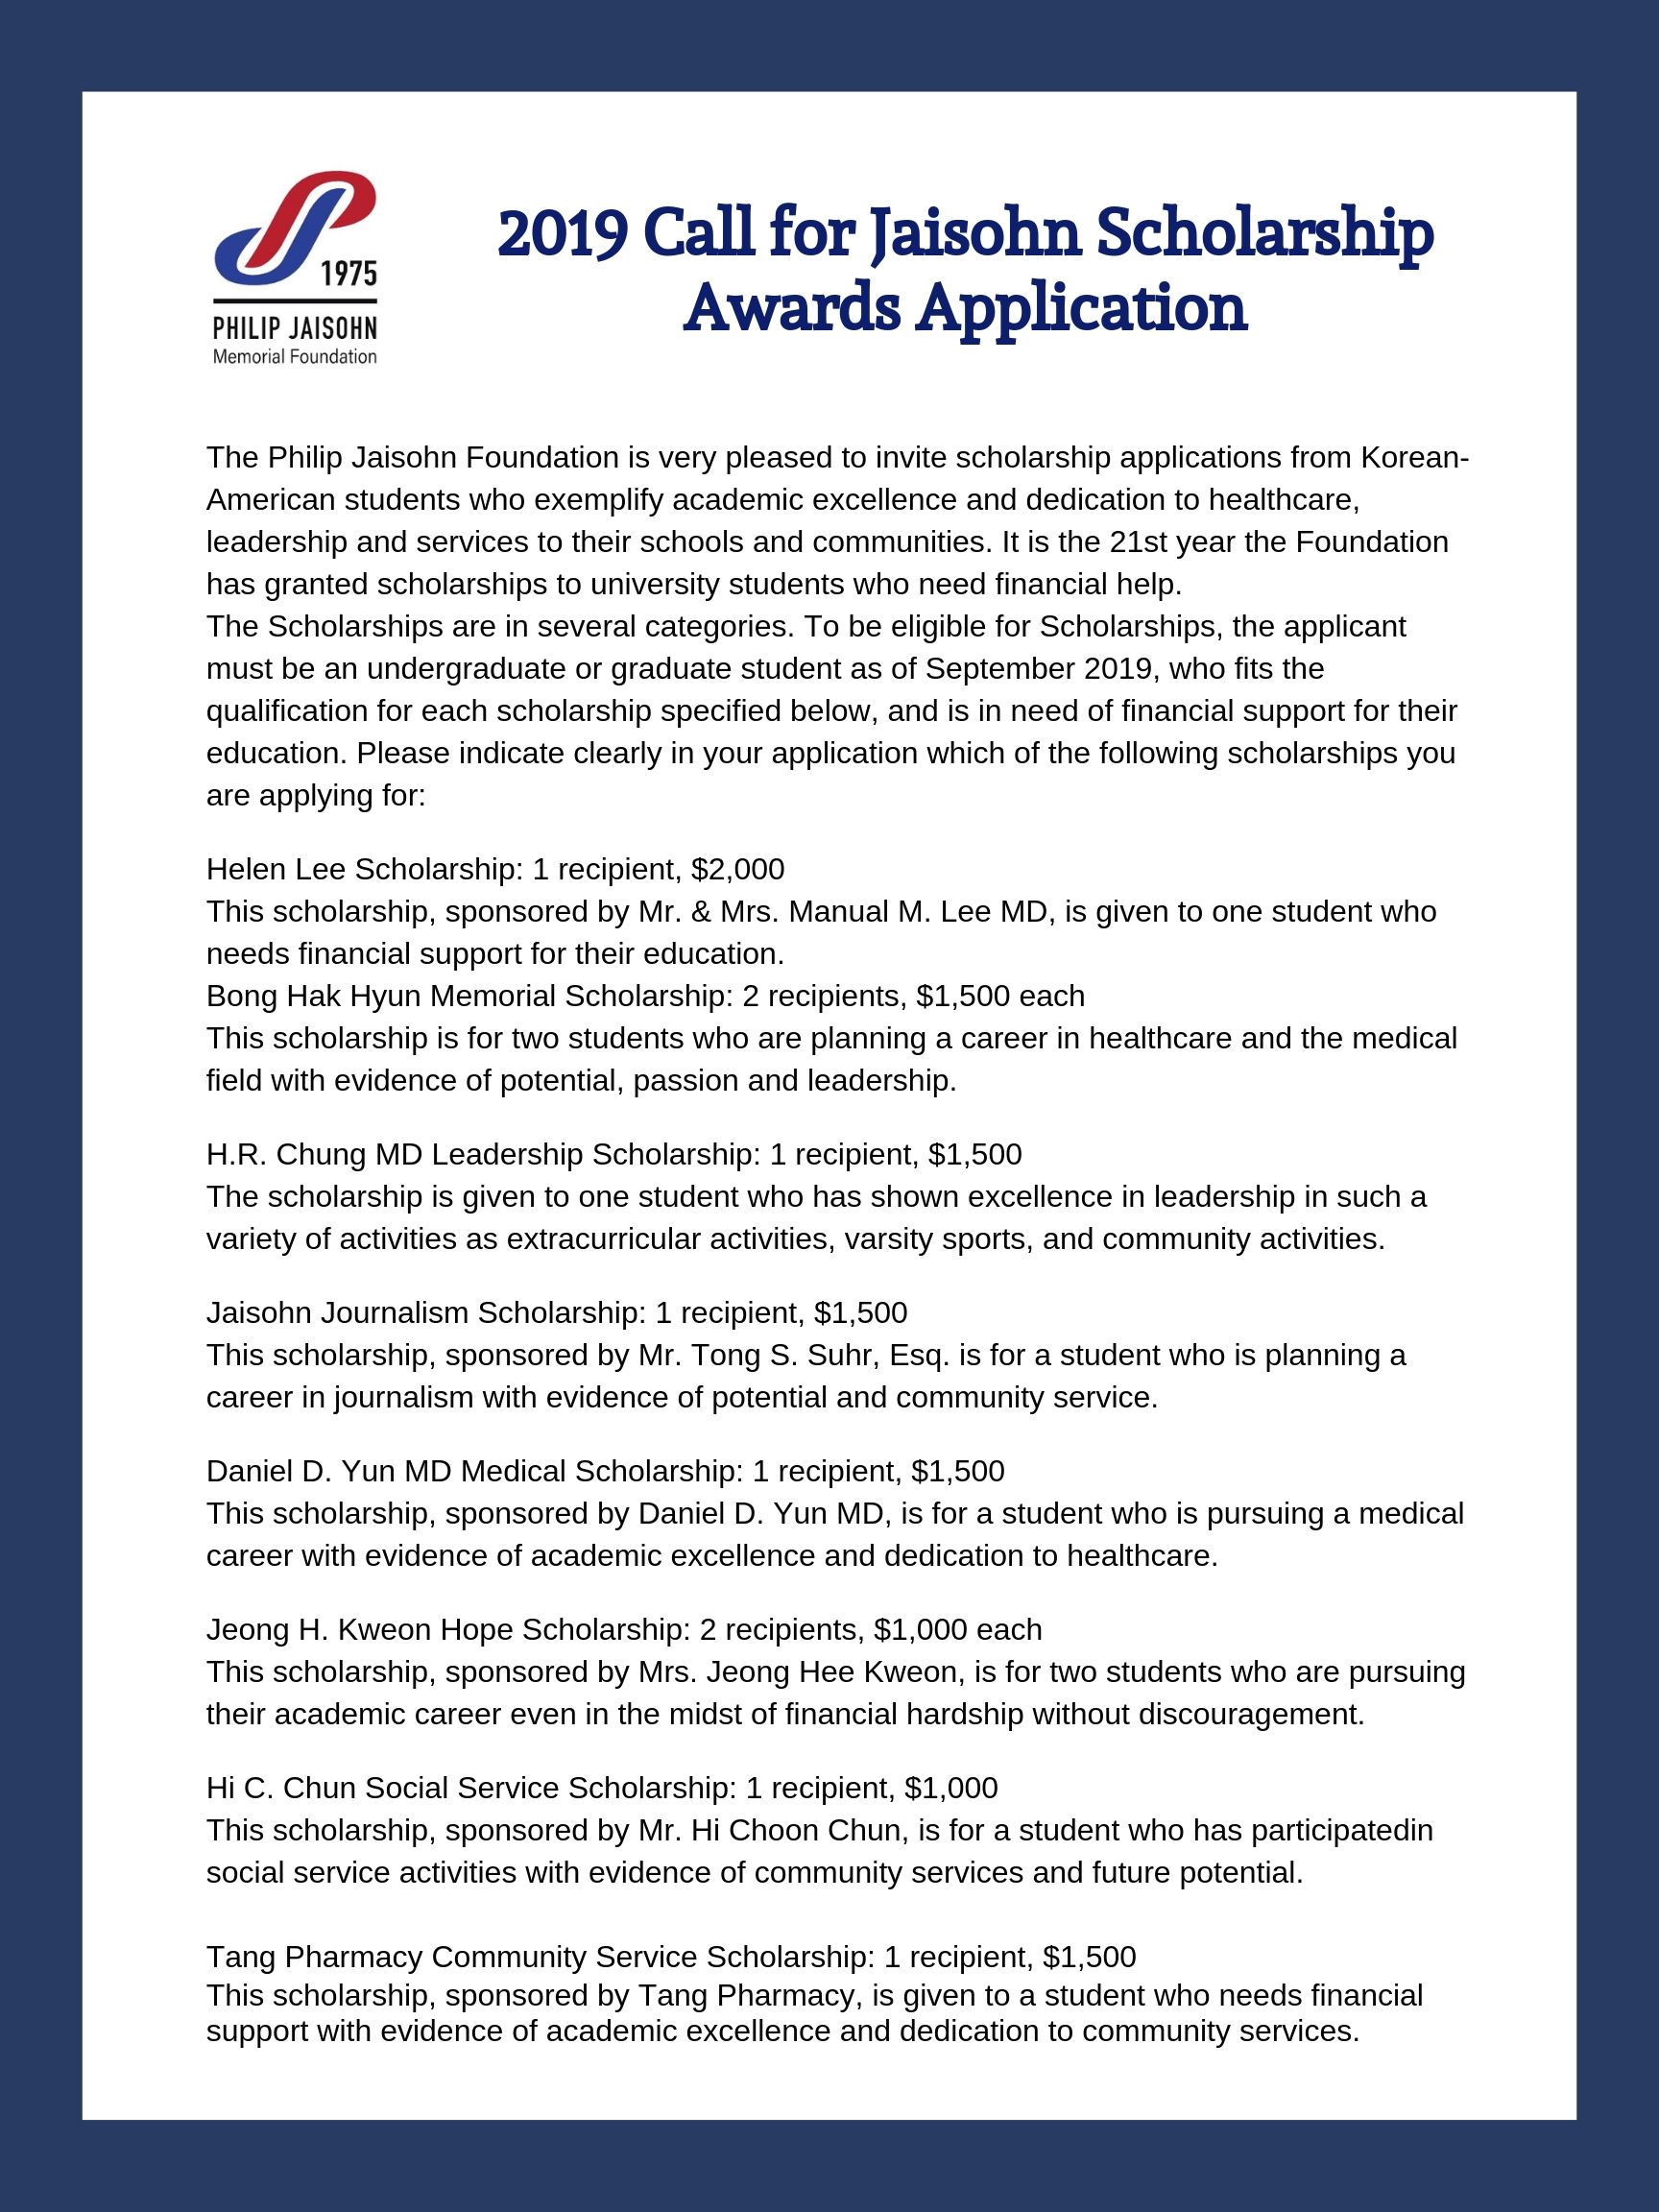 2019 Call for Jaisohn Scholarship Awards Application